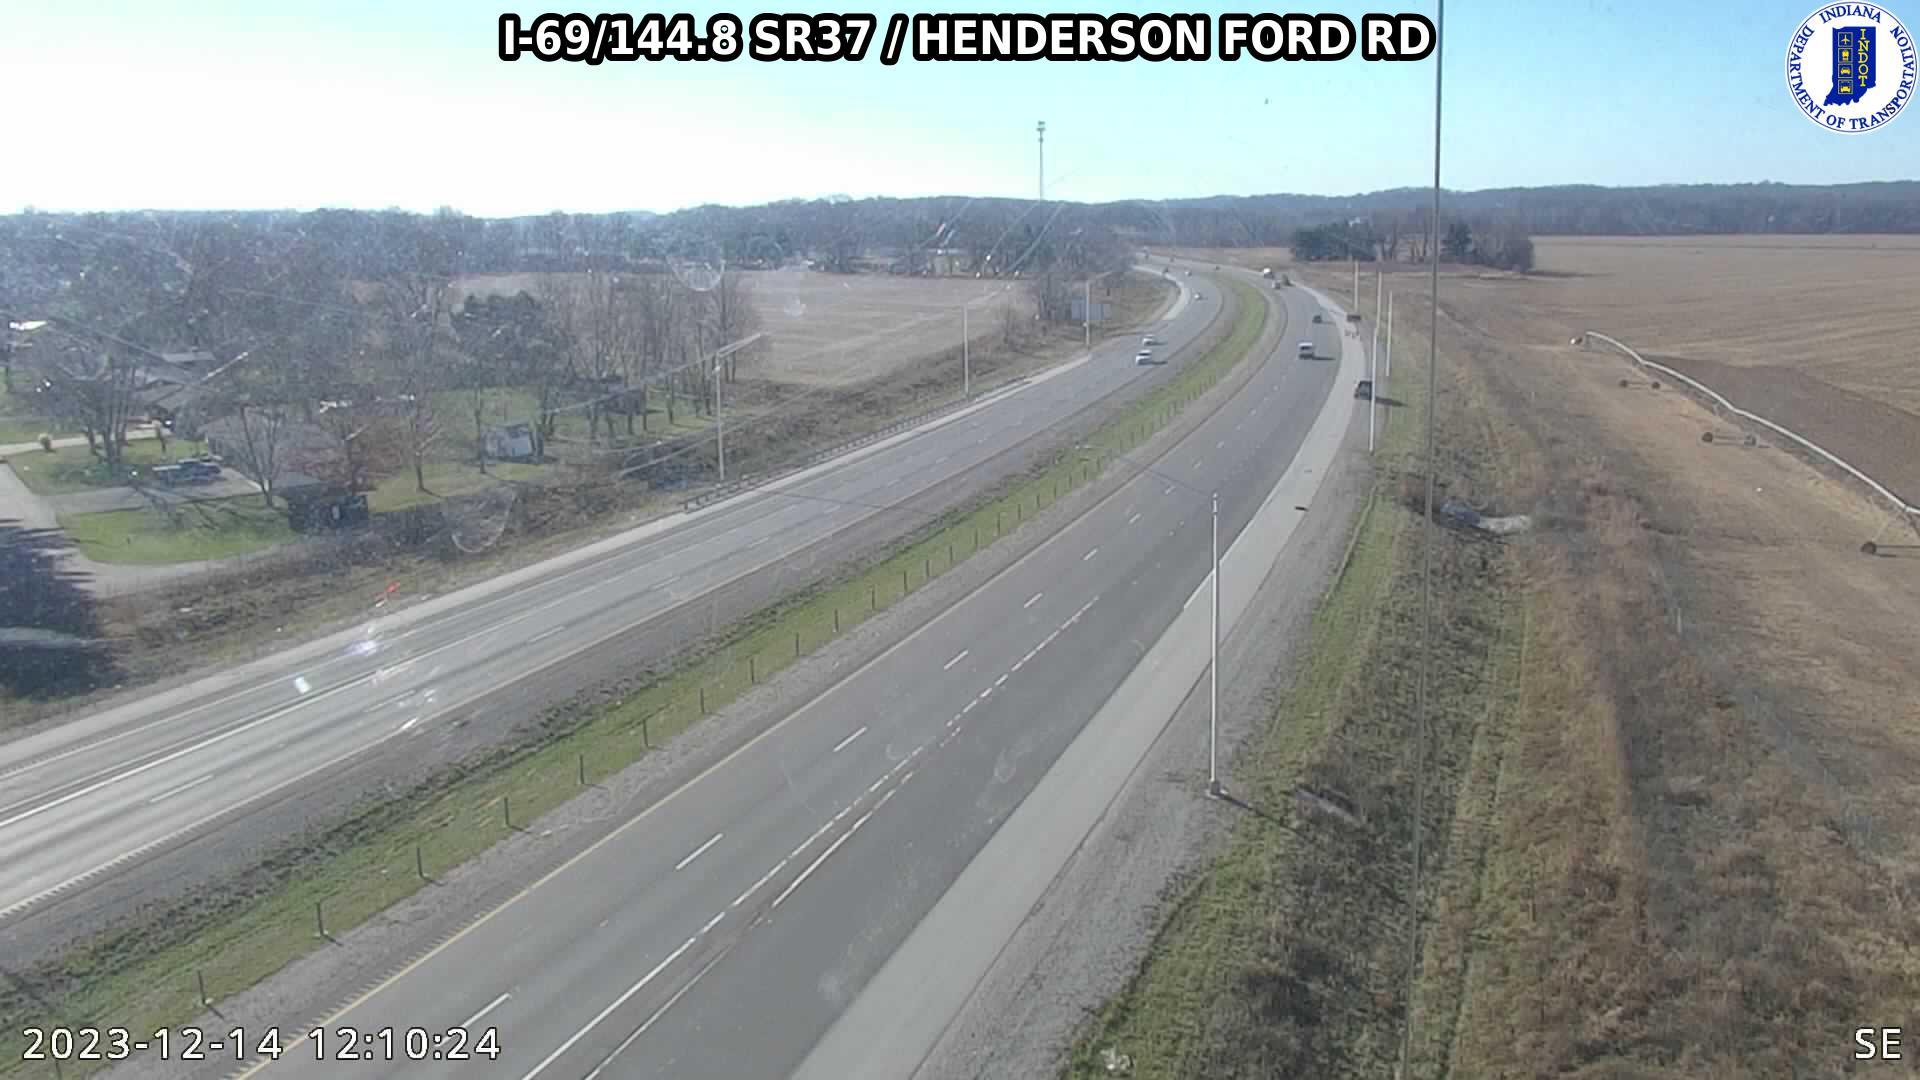 Traffic Cam Adams: I-69: I-69/144.8 SR37 - HENDERSON FORD RD: I-69/144.8 SR37 - HENDERSON FORD RD Player